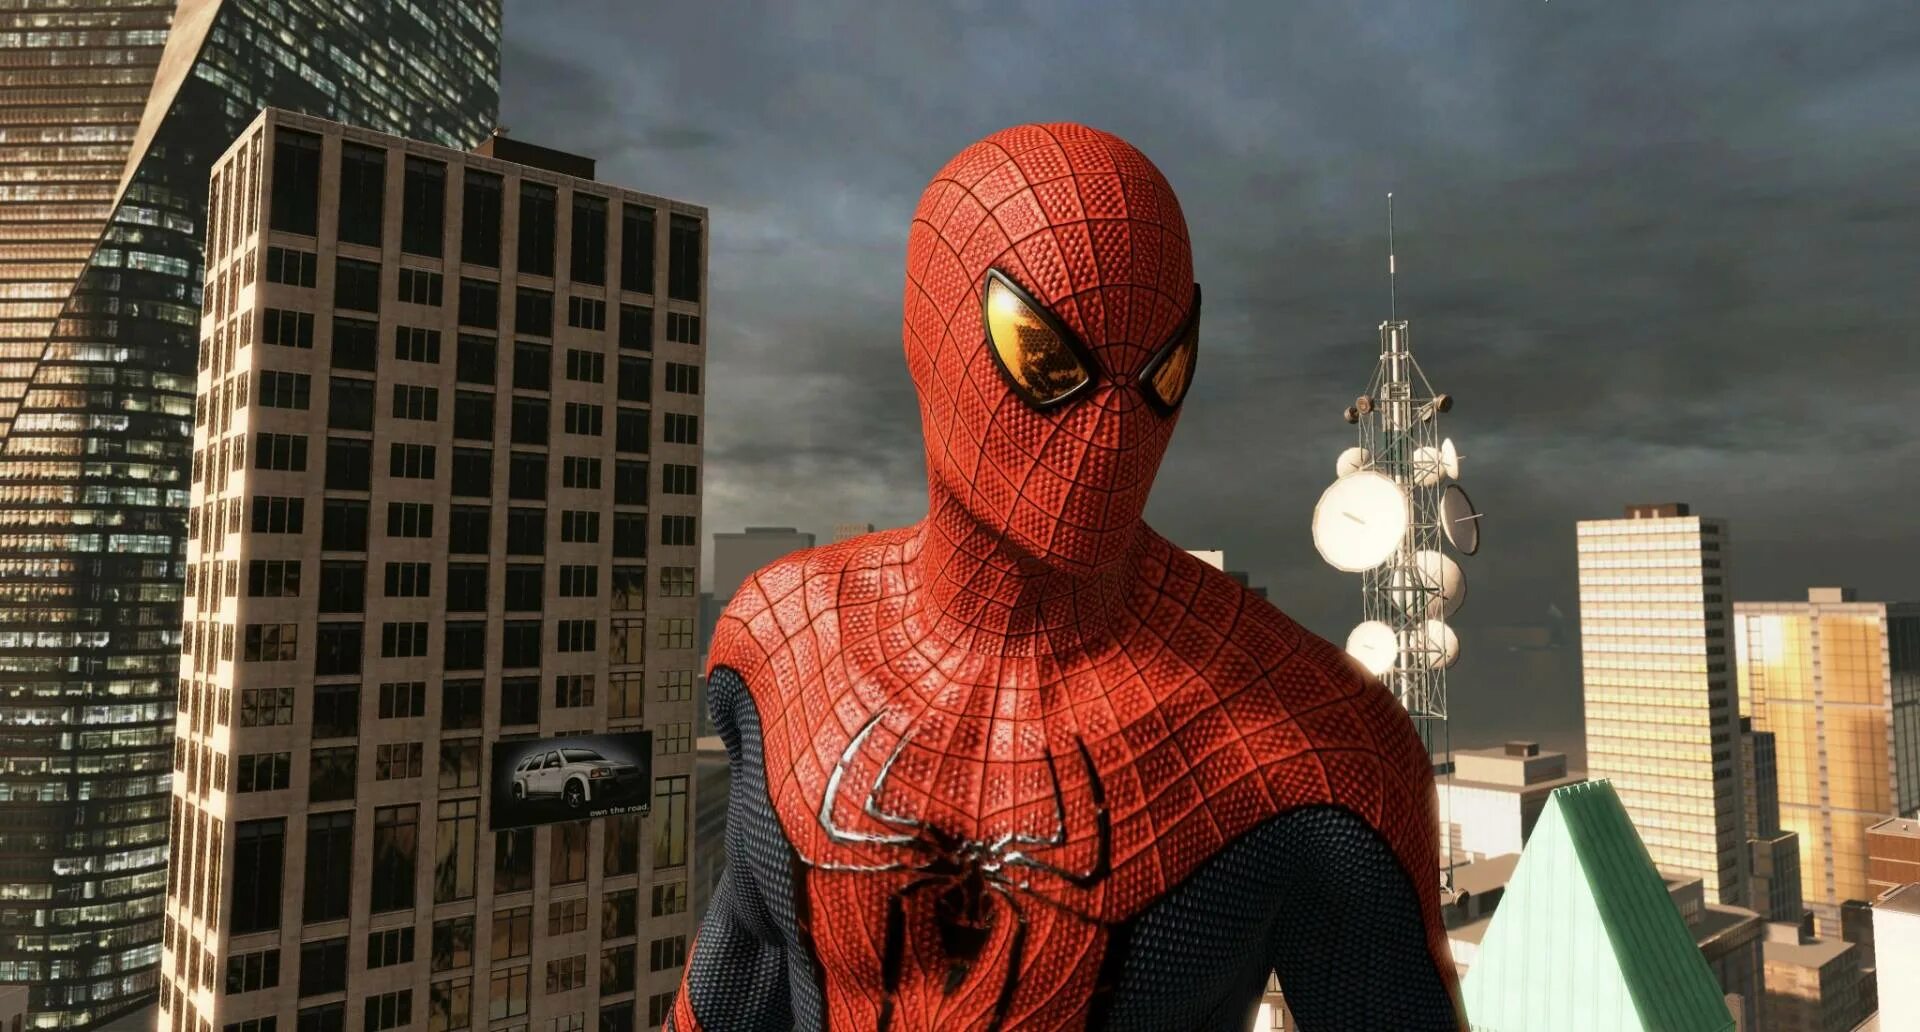 The amazing Spider-man (игра, 2012). Новый человек паук 1 (amazing Spider-man 1). The amazing Spider-man 2 игра. Спайдер Мэн 2012.